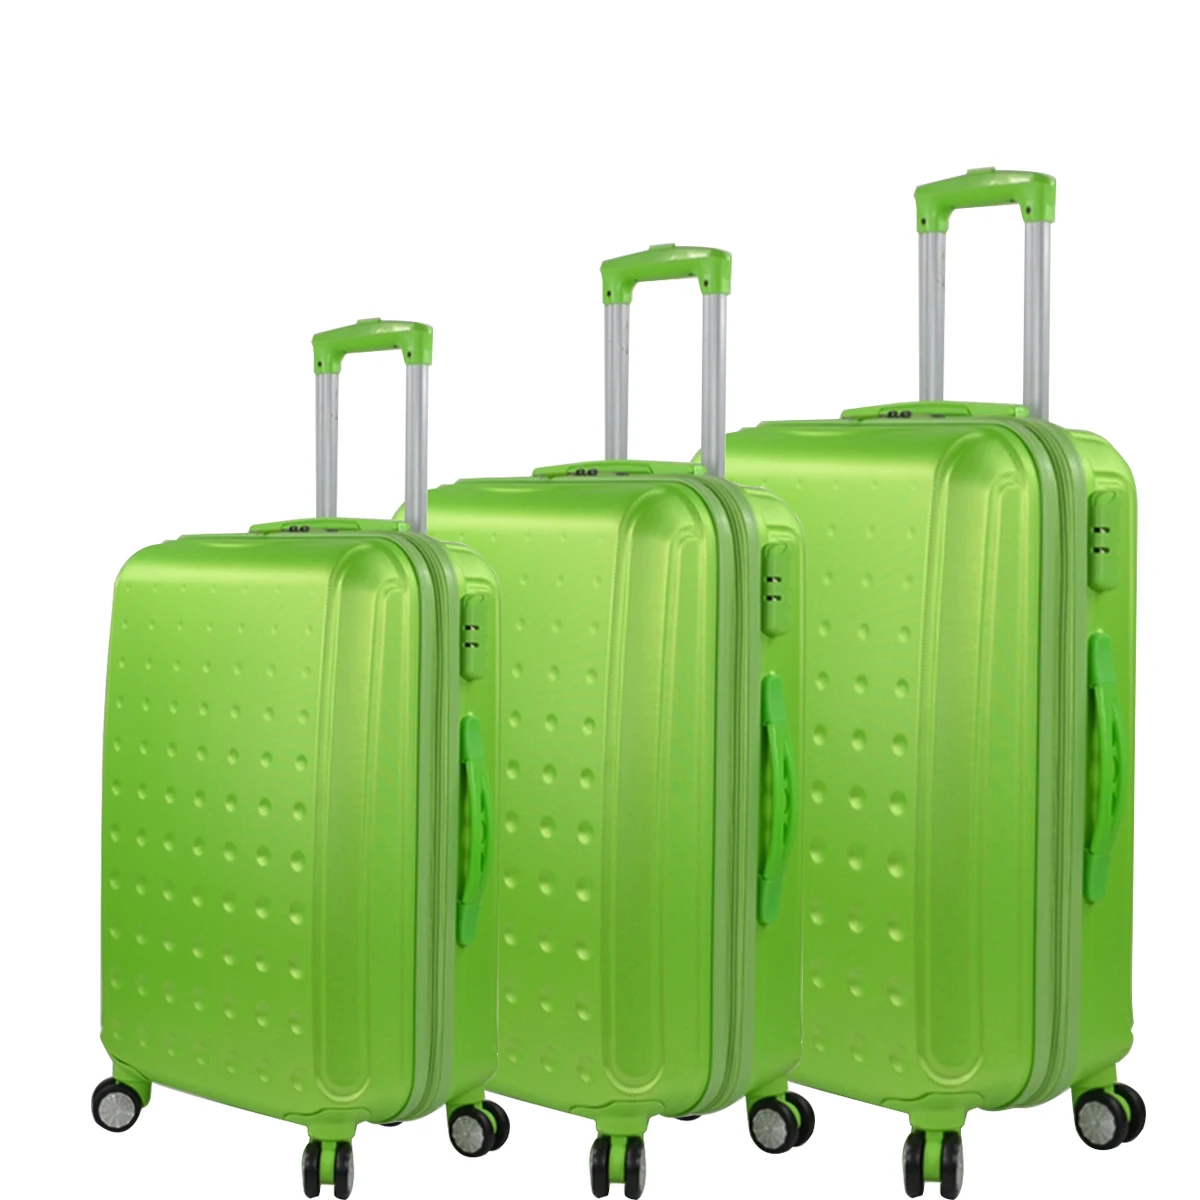 

carpisa luggage 20 inch black suit case hand luggage valise luggage with trolley, Customized